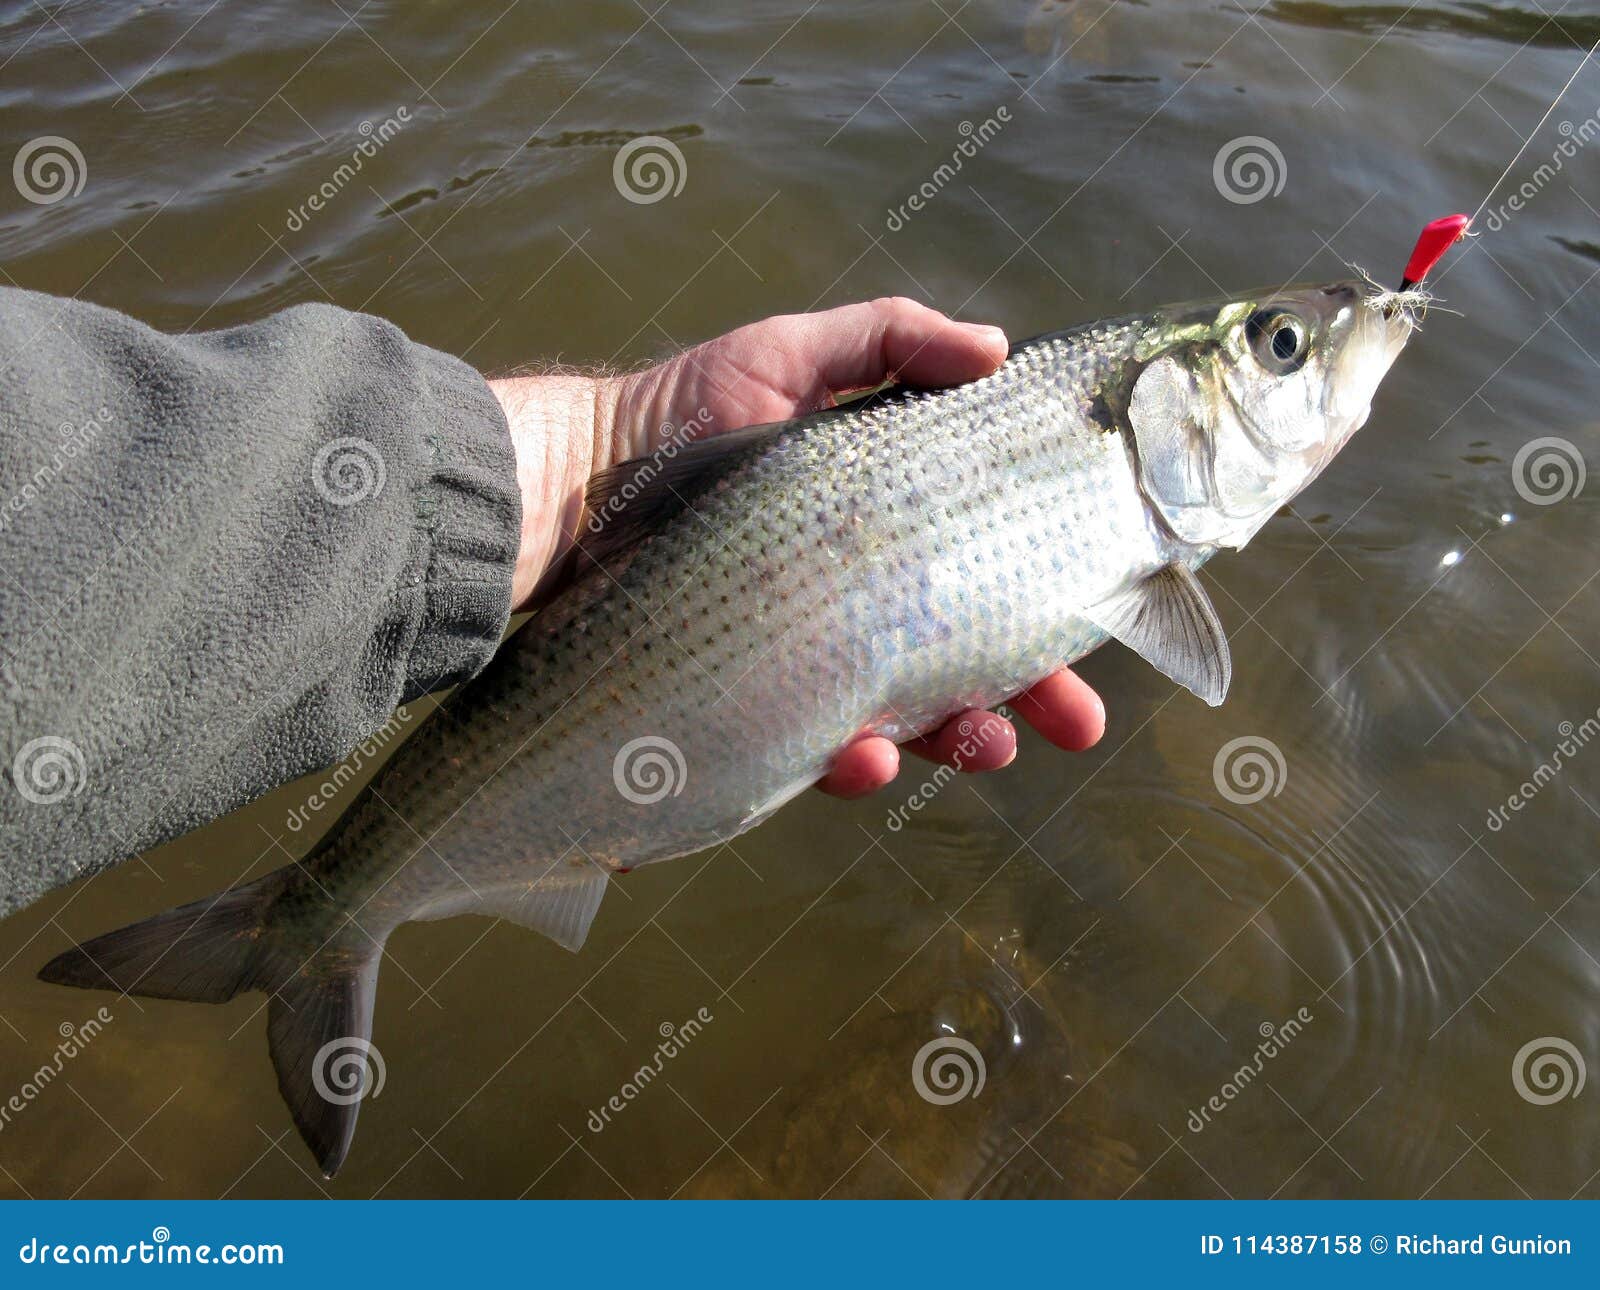 https://thumbs.dreamstime.com/z/shad-fishing-washington-dc-photo-caught-pink-dart-fletcher-s-boat-house-april-now-running-fish-114387158.jpg